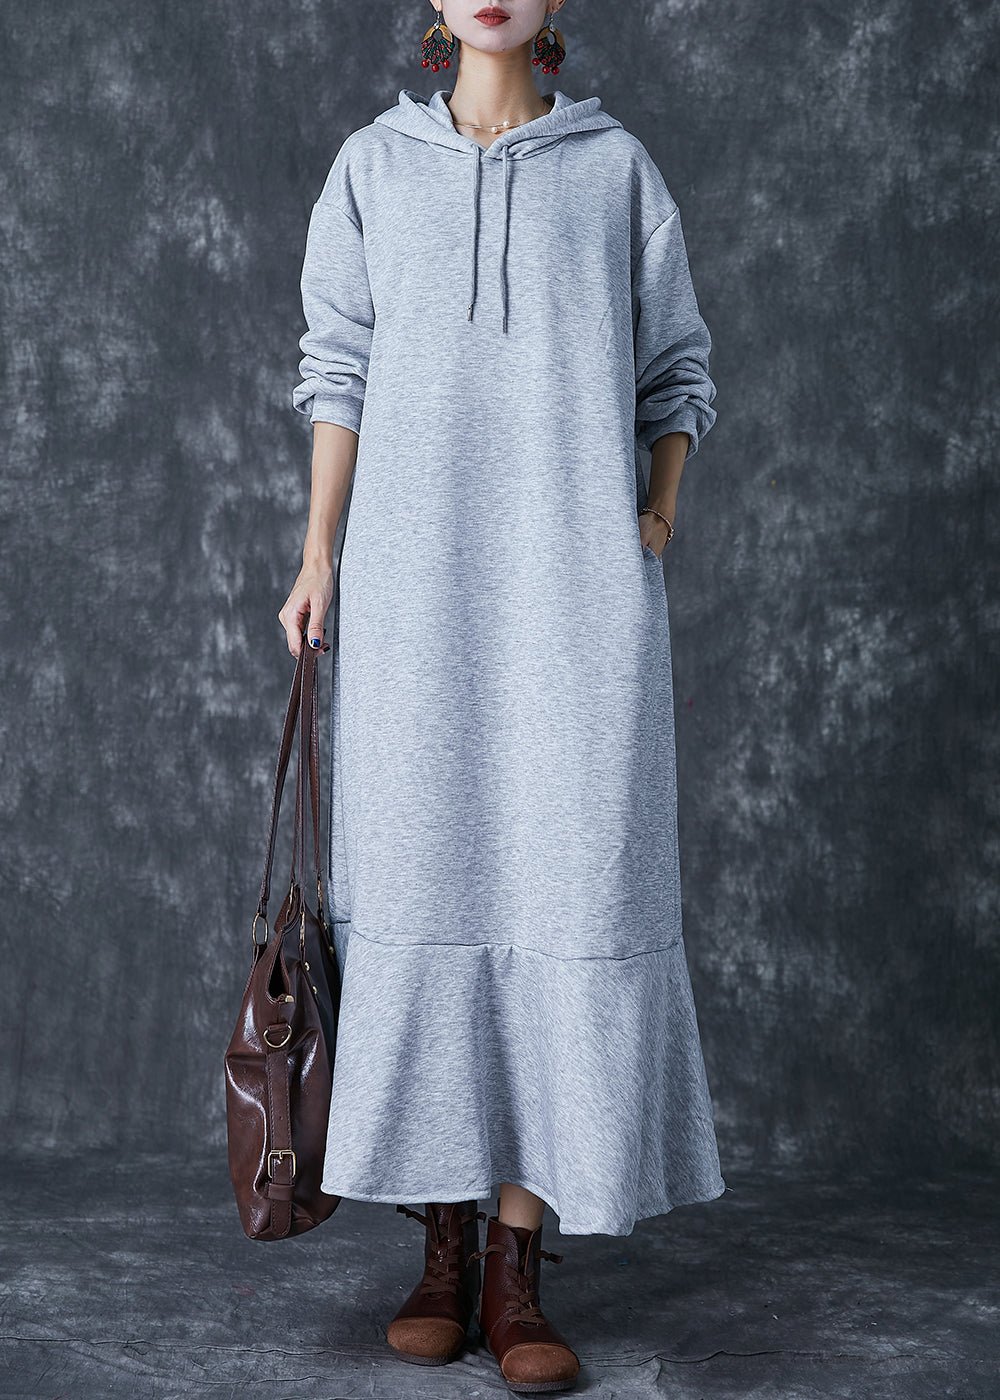 Stylish Grey Hooded Patchwork Ruffles Cotton Pullover Streetwear Dress Fall